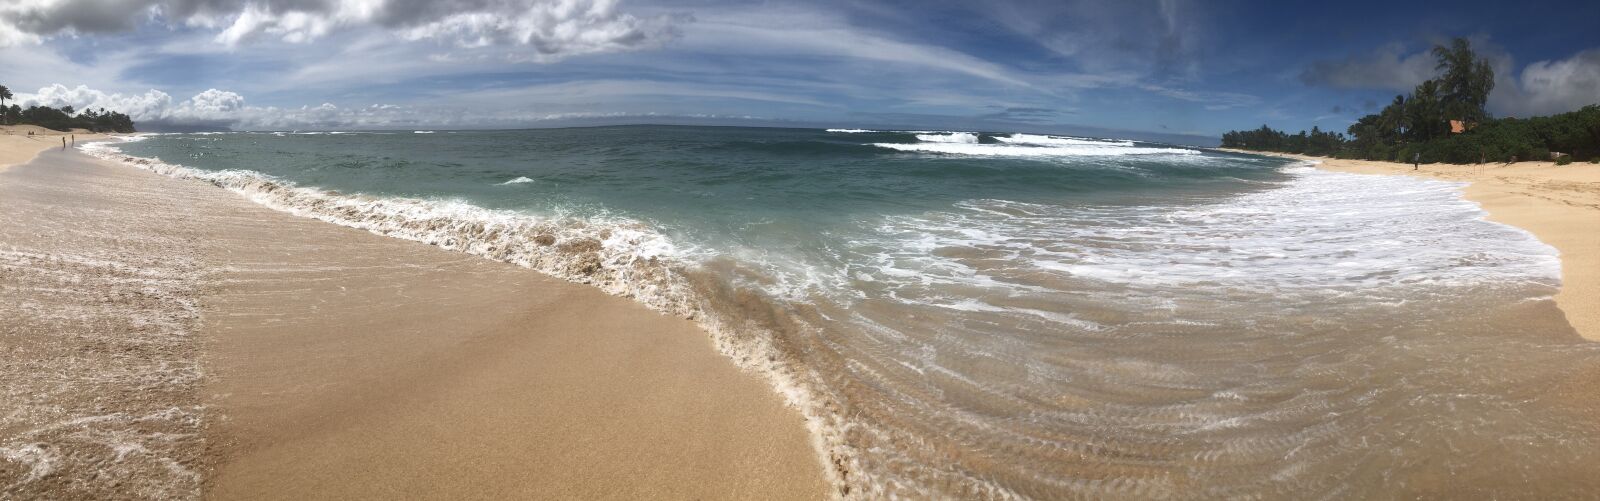 Apple iPhone 8 Plus + iPhone 8 Plus back camera 3.99mm f/1.8 sample photo. Beach, hawaii, sand photography